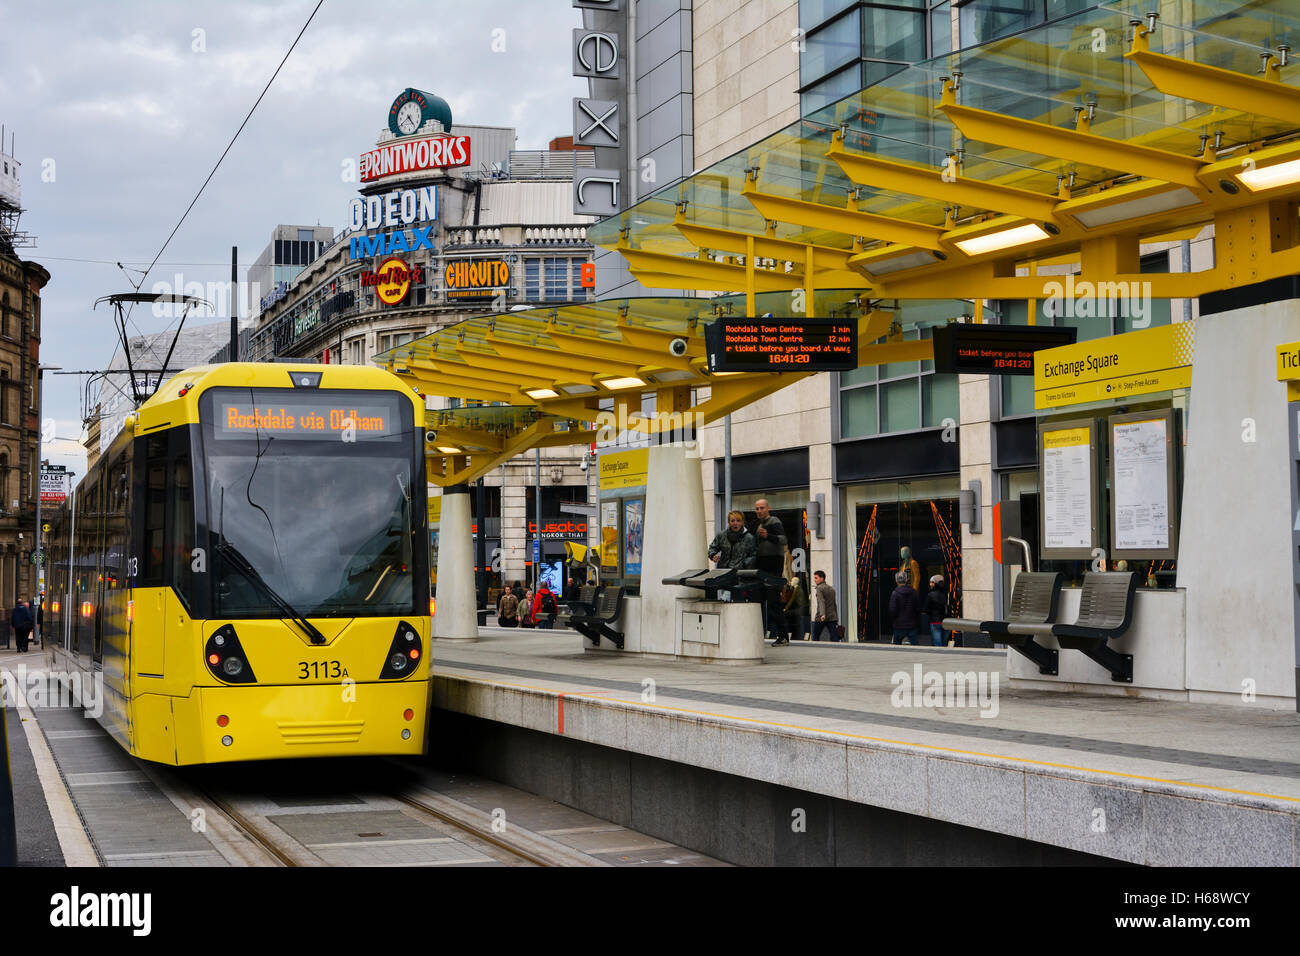 Metrolink Straßenbahn am Exchange Square Straßenbahnhaltestelle in Manchester. Stockfoto